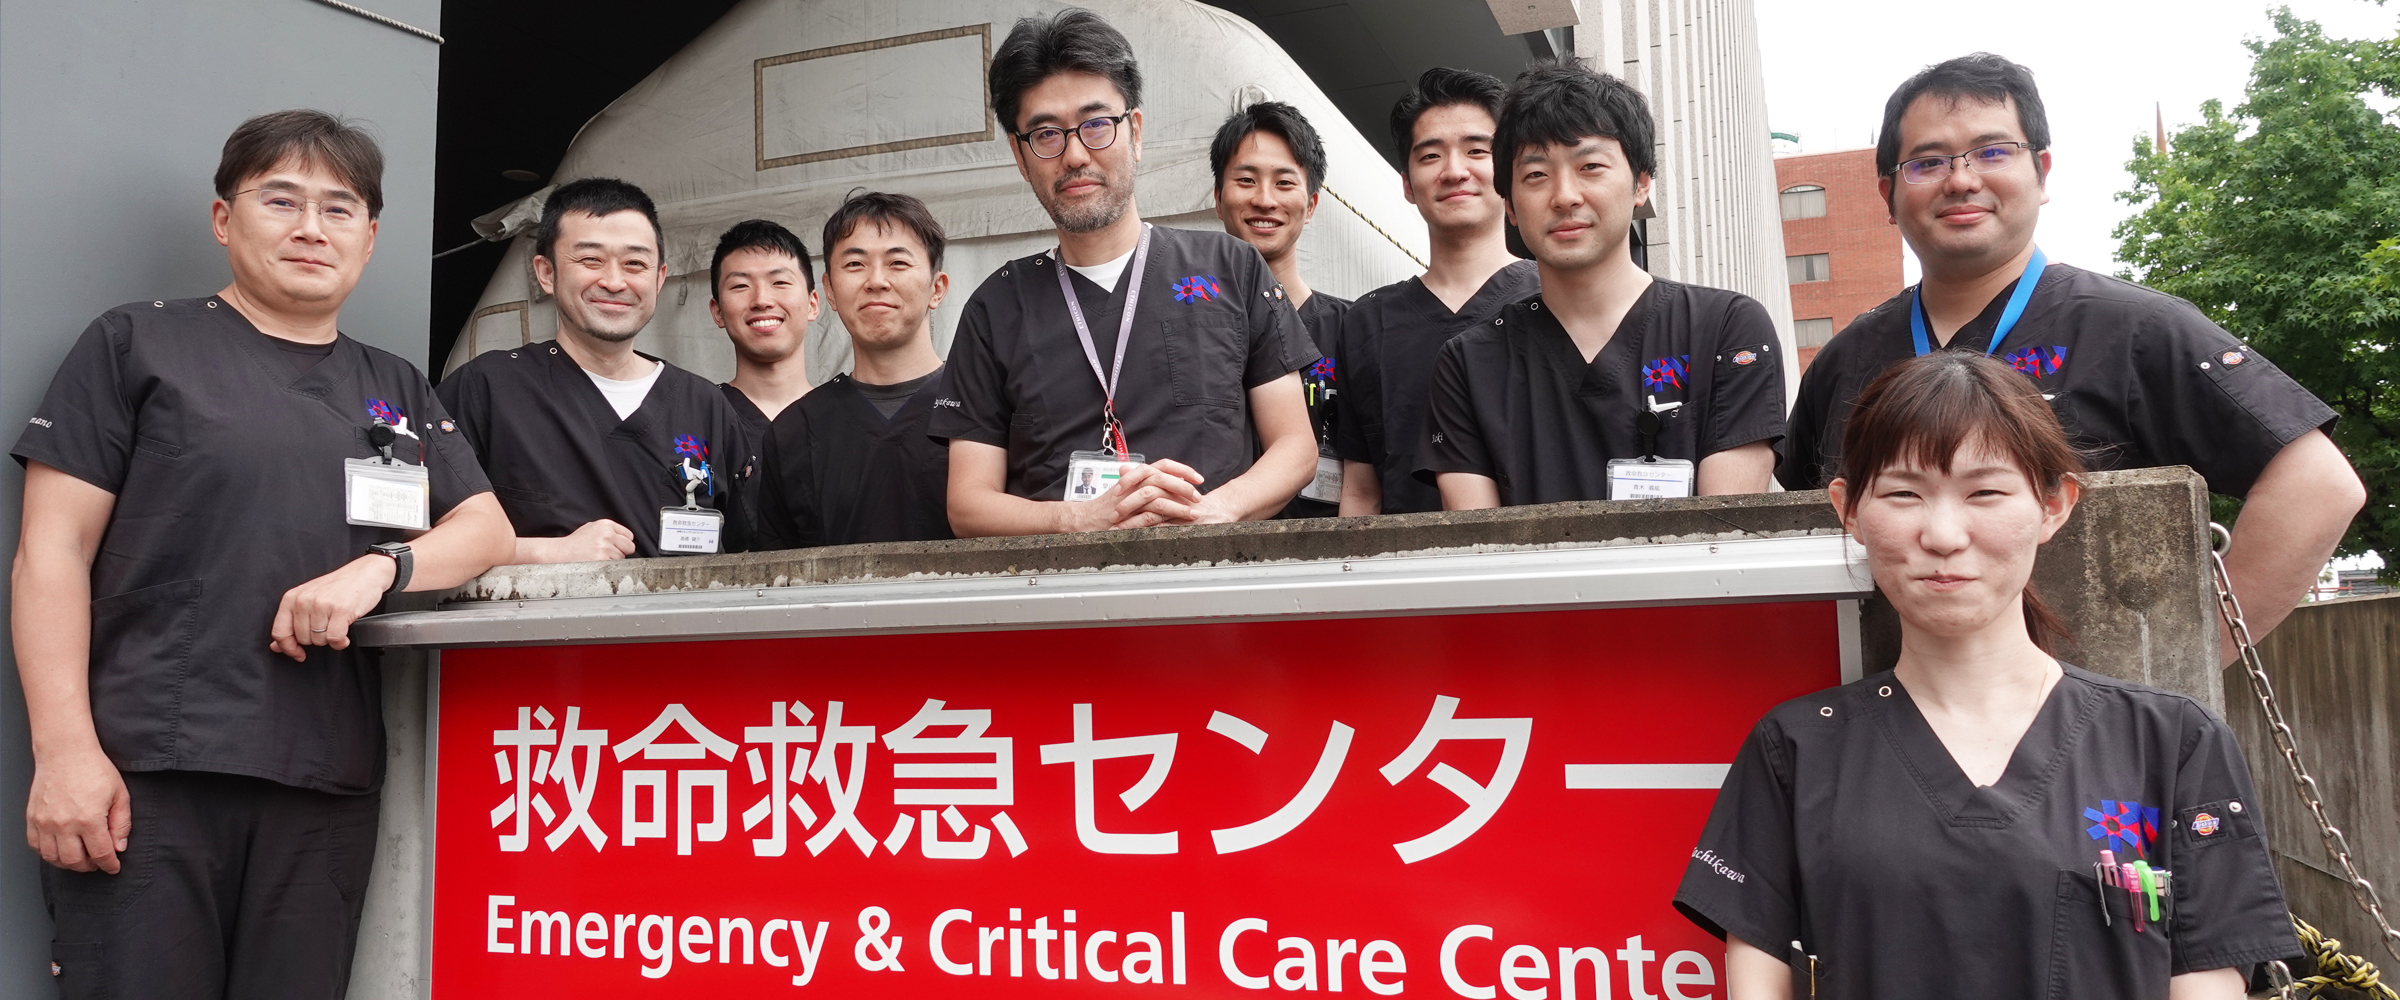 Nagasaki University Hospital Acute & Critical Care Center Coordination Office for Emergency Medicine and International Response